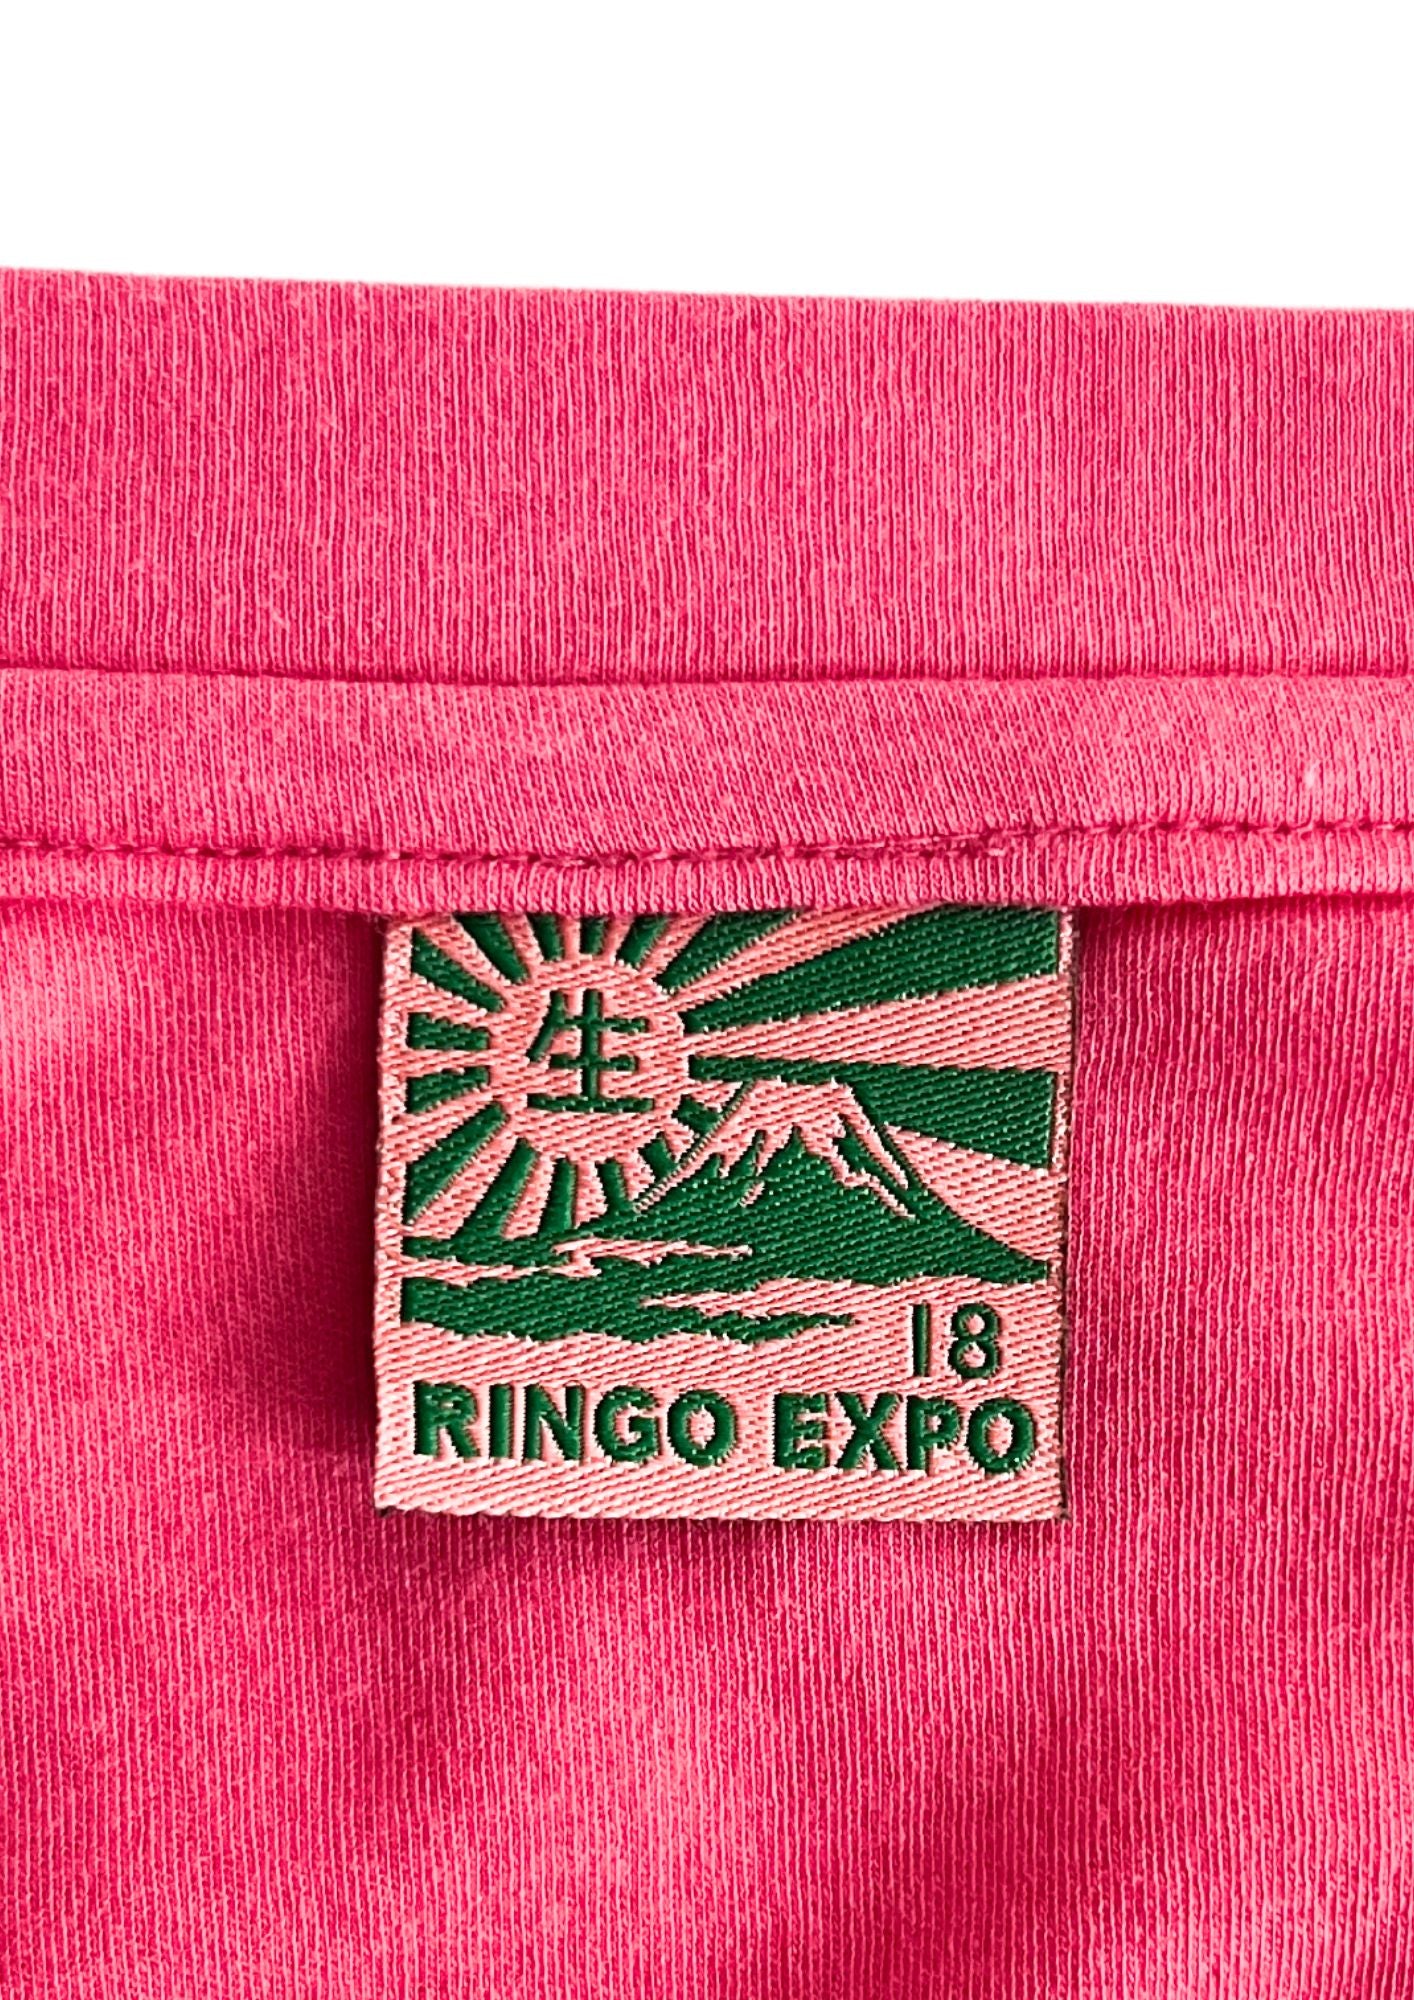 2018 SHEENA RINGO Ringo Expo 'Trivisha' Japanese Band Tee